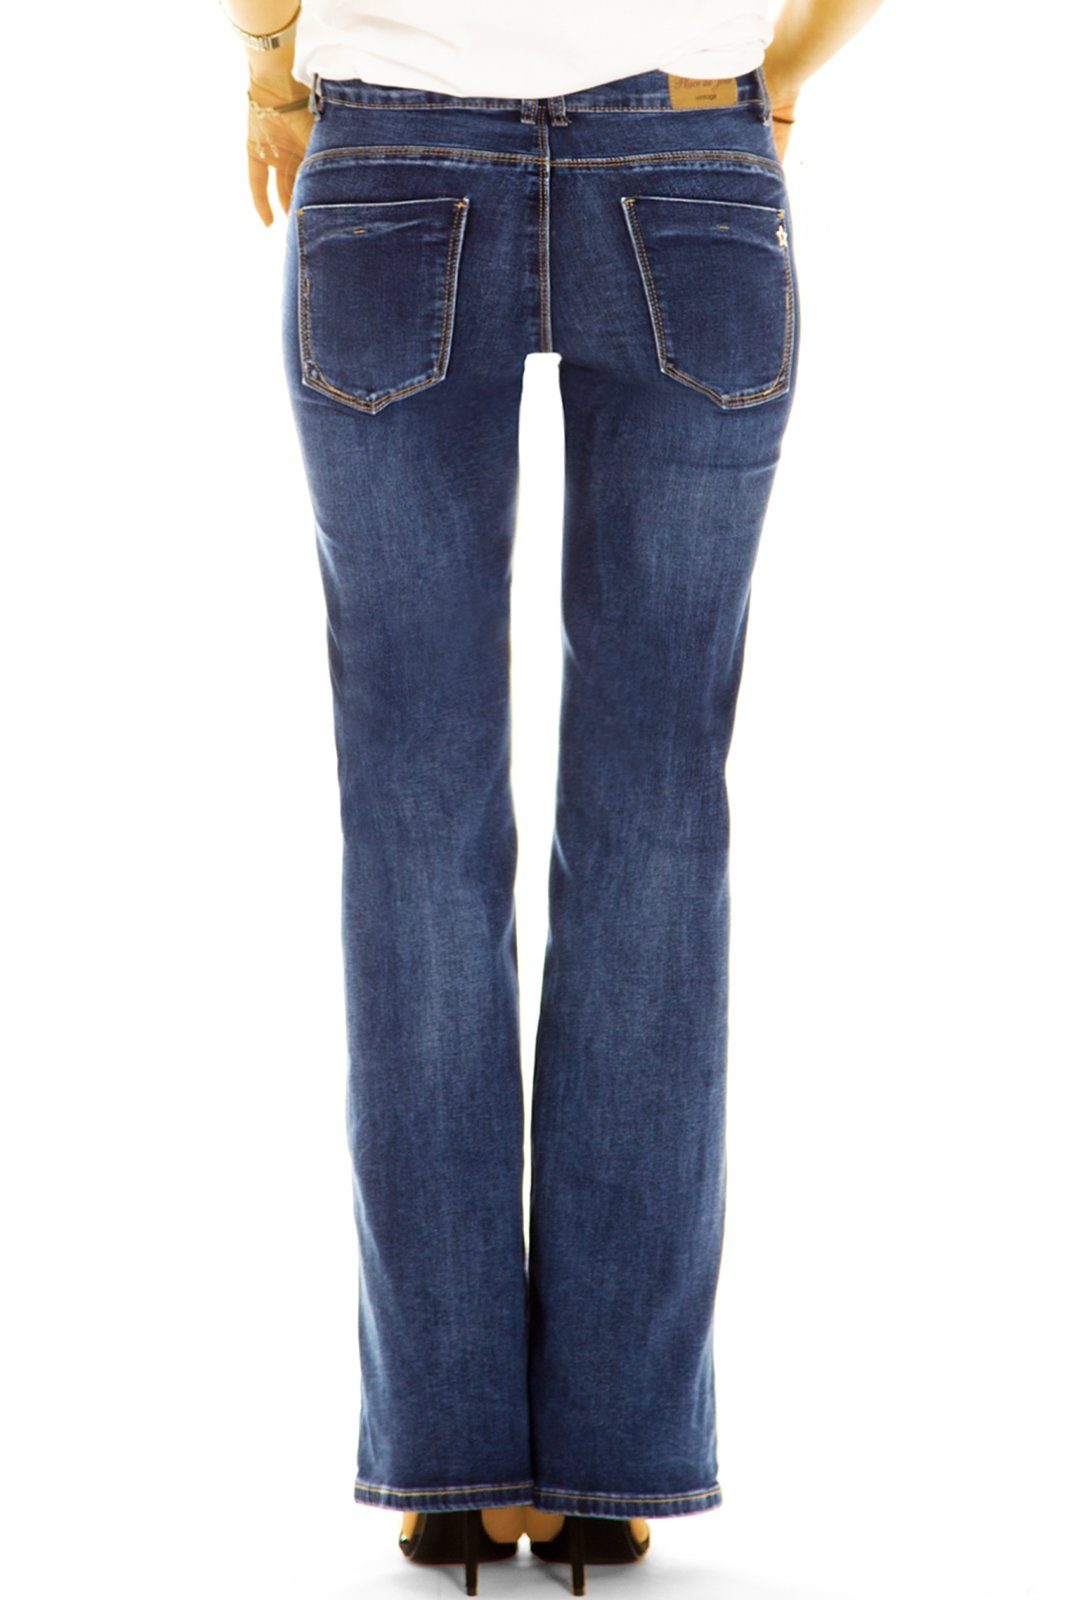 Damen Passform Medium mit j5e - Jeans Bootcut Hose - Bootcut-Jeans Stretch-Anteil, ausgestellter be styled 5-Pocket-Style Waist